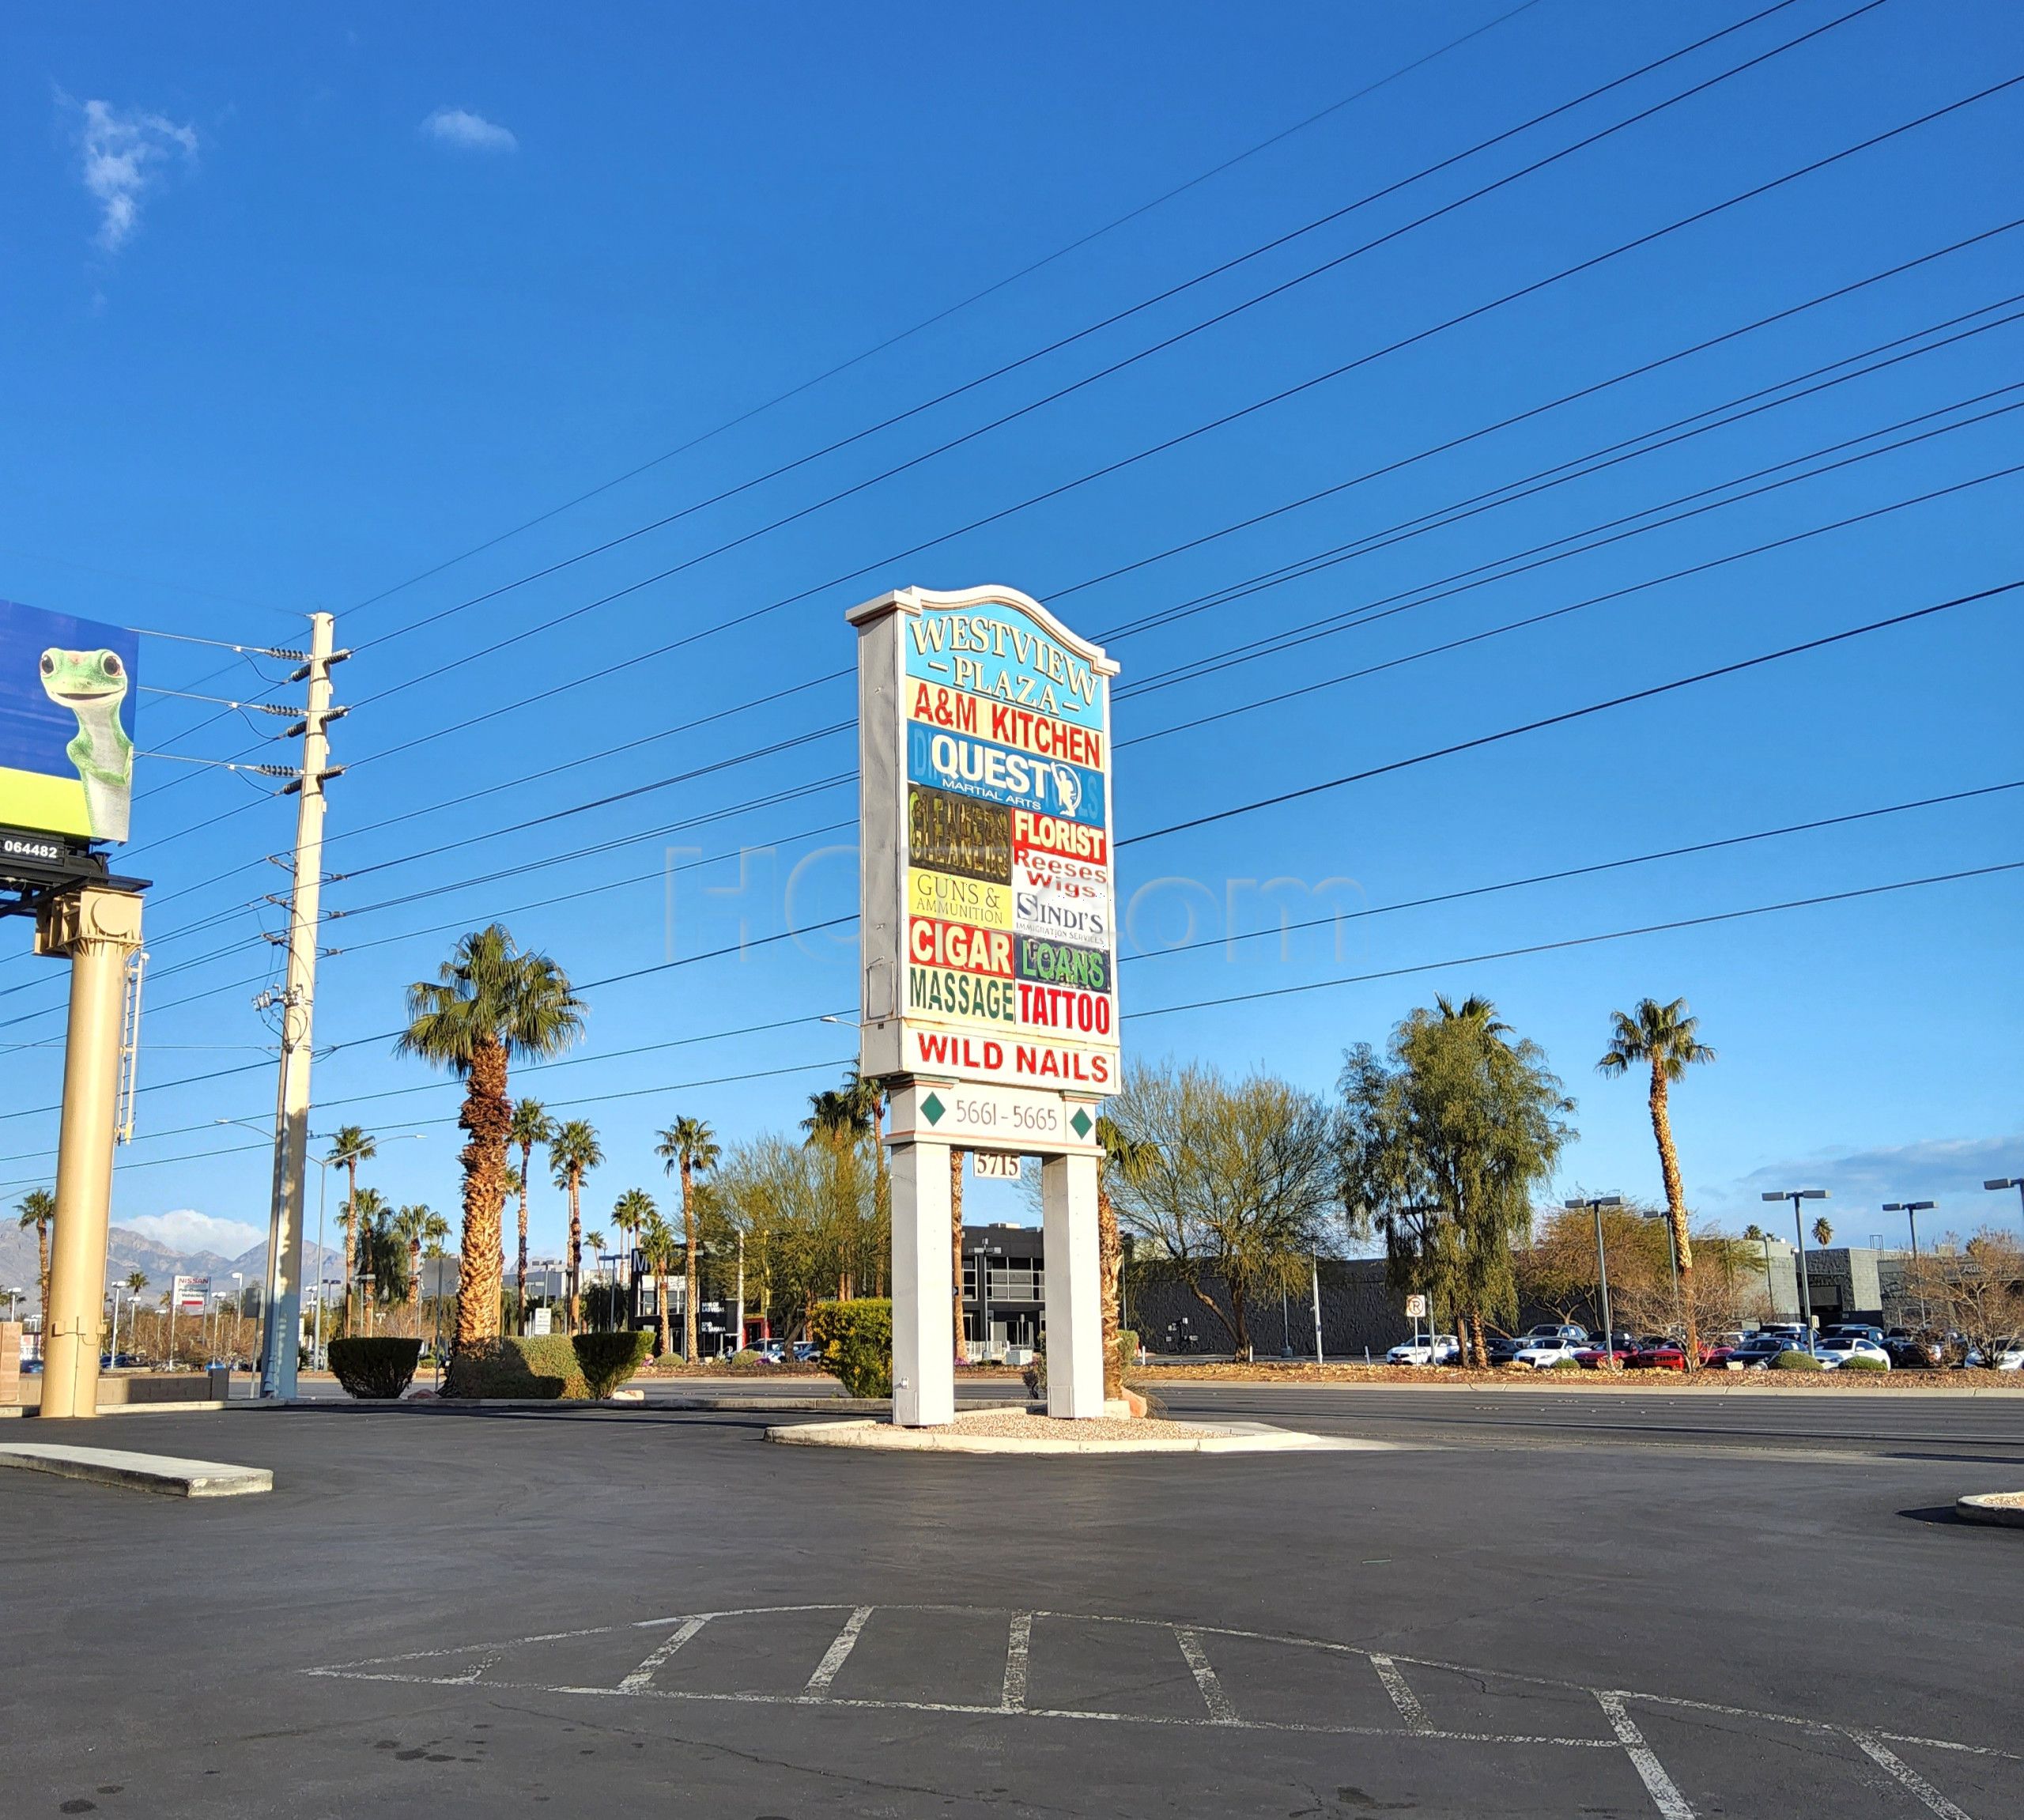 Las Vegas, Nevada Oriental Massage & Foot Spa